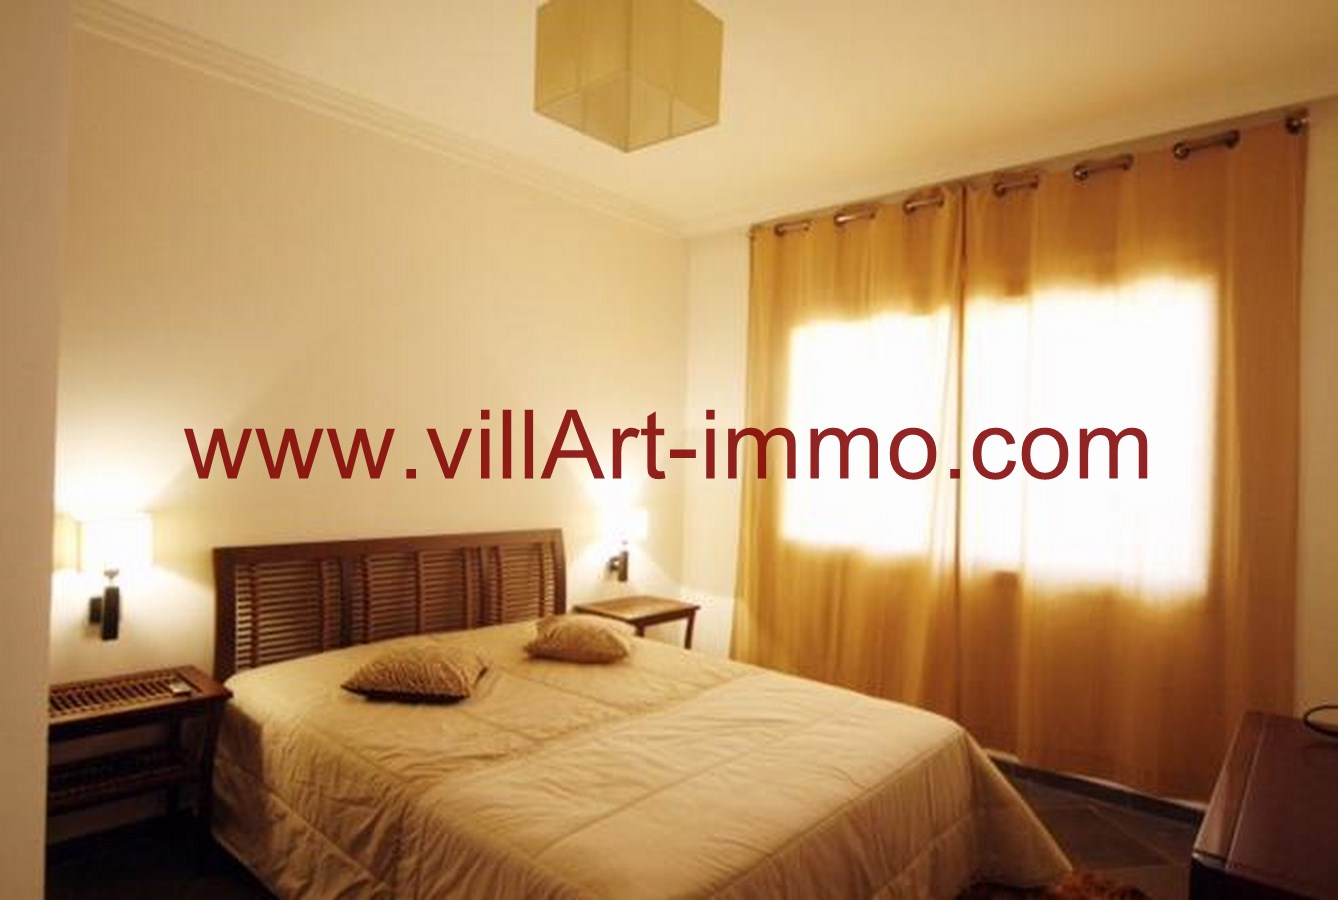 4-Location-Appartement-Meublé-Tanger-Chambre 1-L709-Villart immo